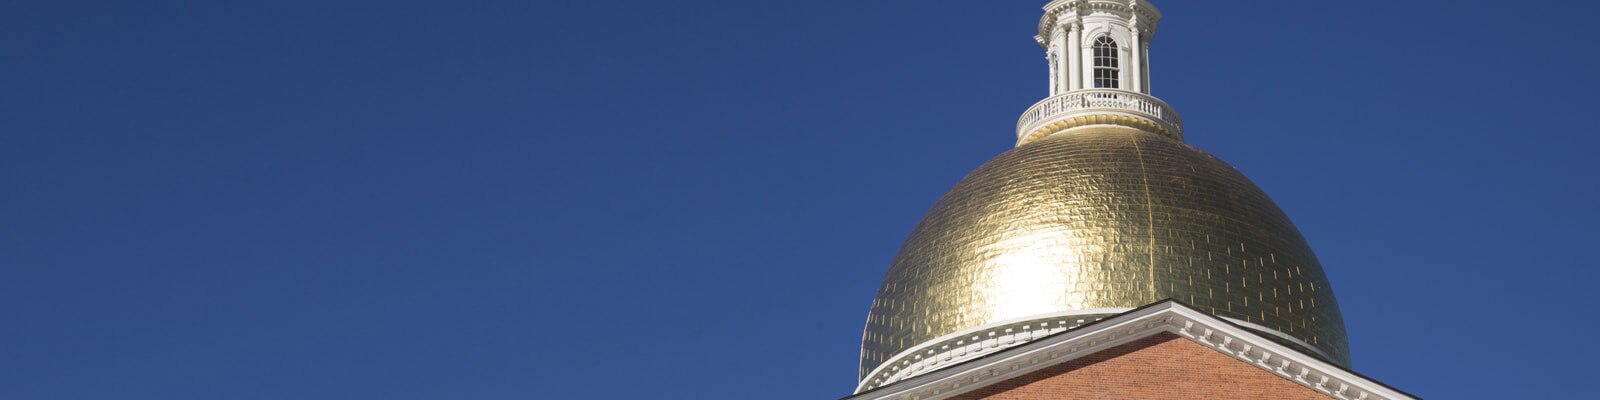 Massachusetts state house dome